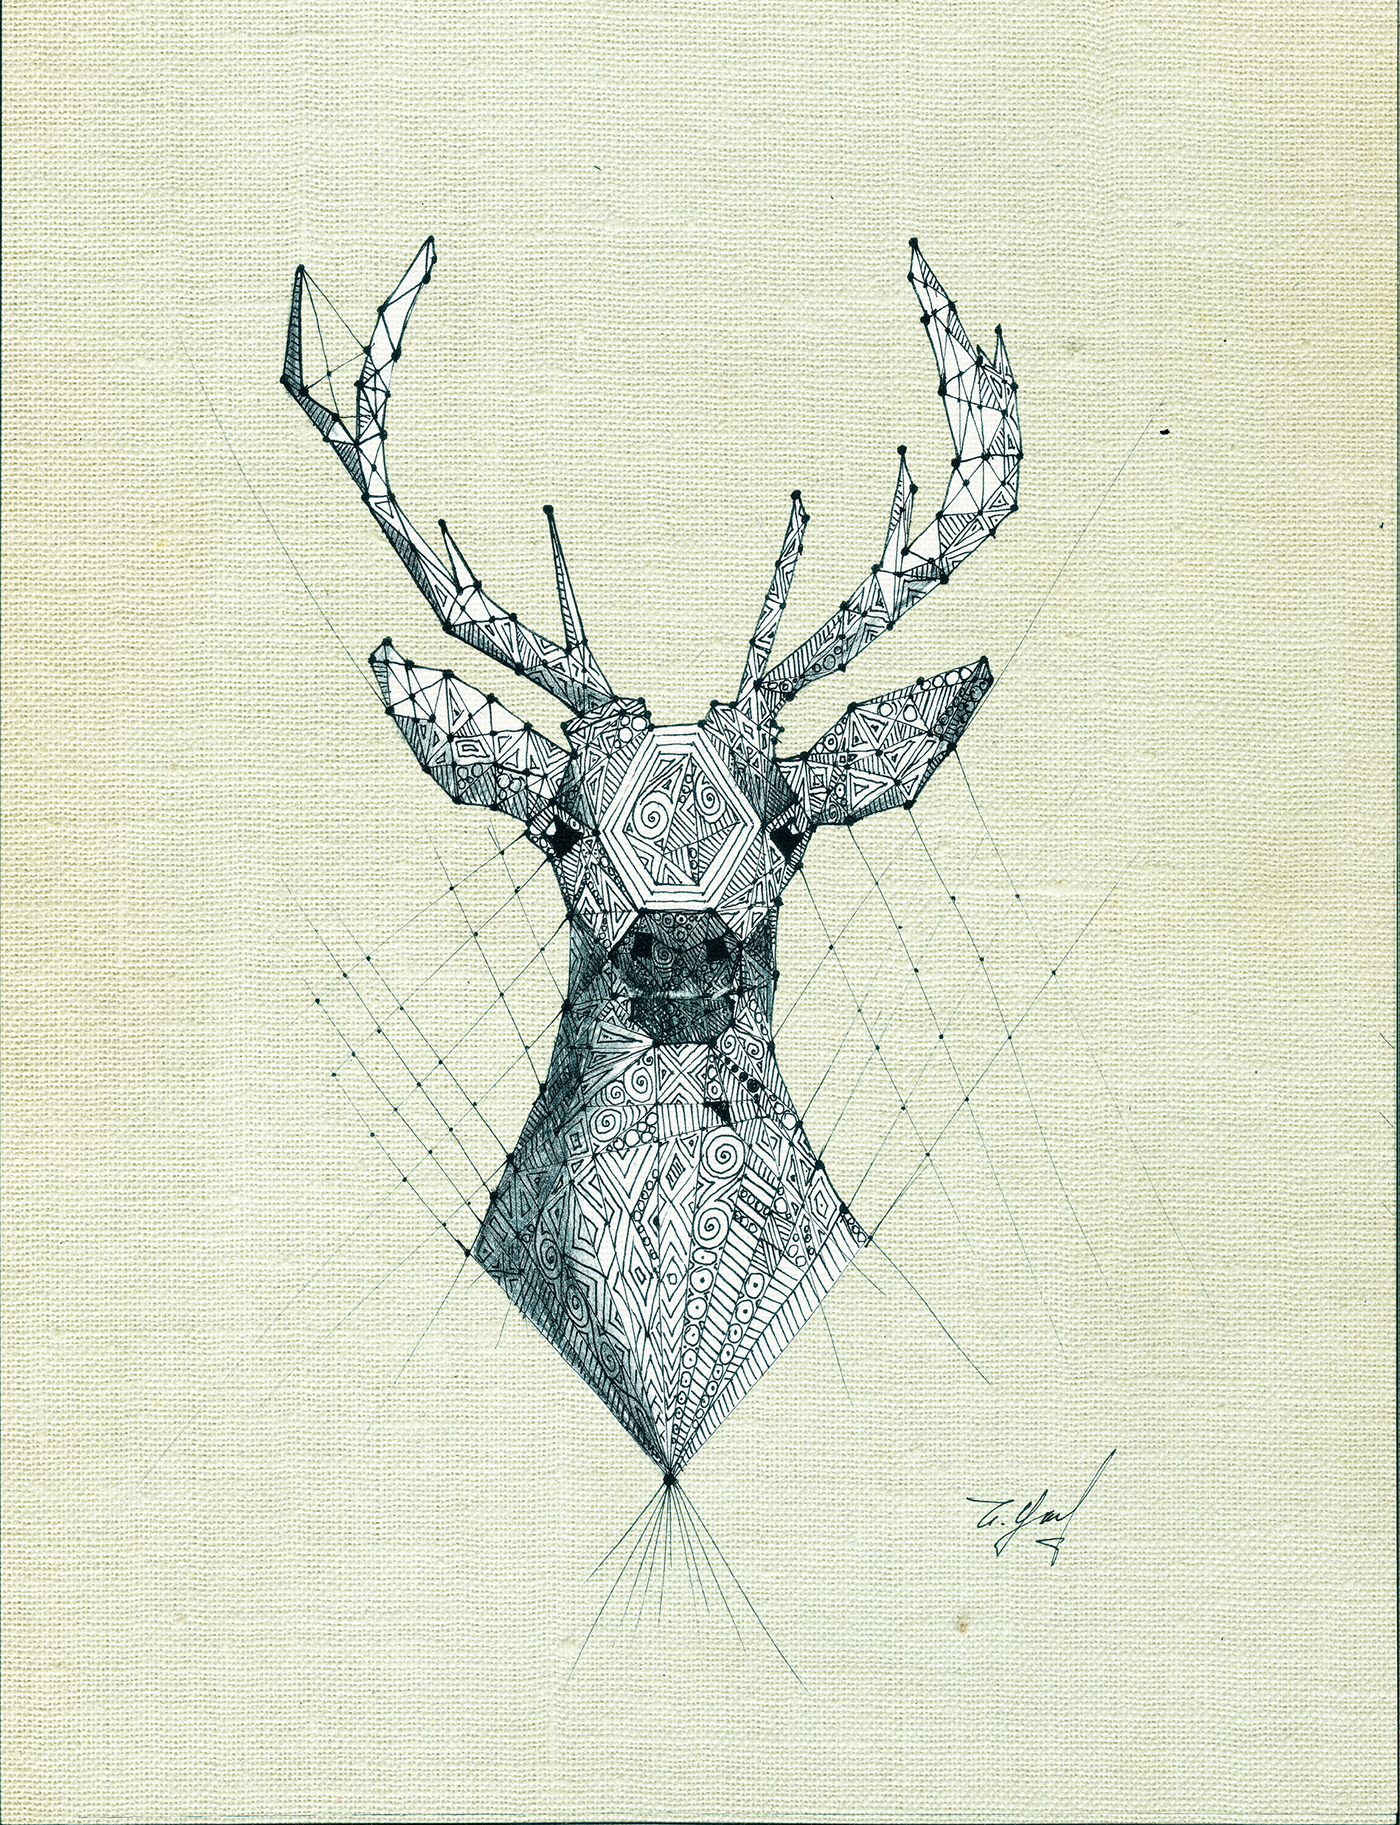 antelope win winner awarde top animal poster art artwork digital ink paper pen ink pen black&withe